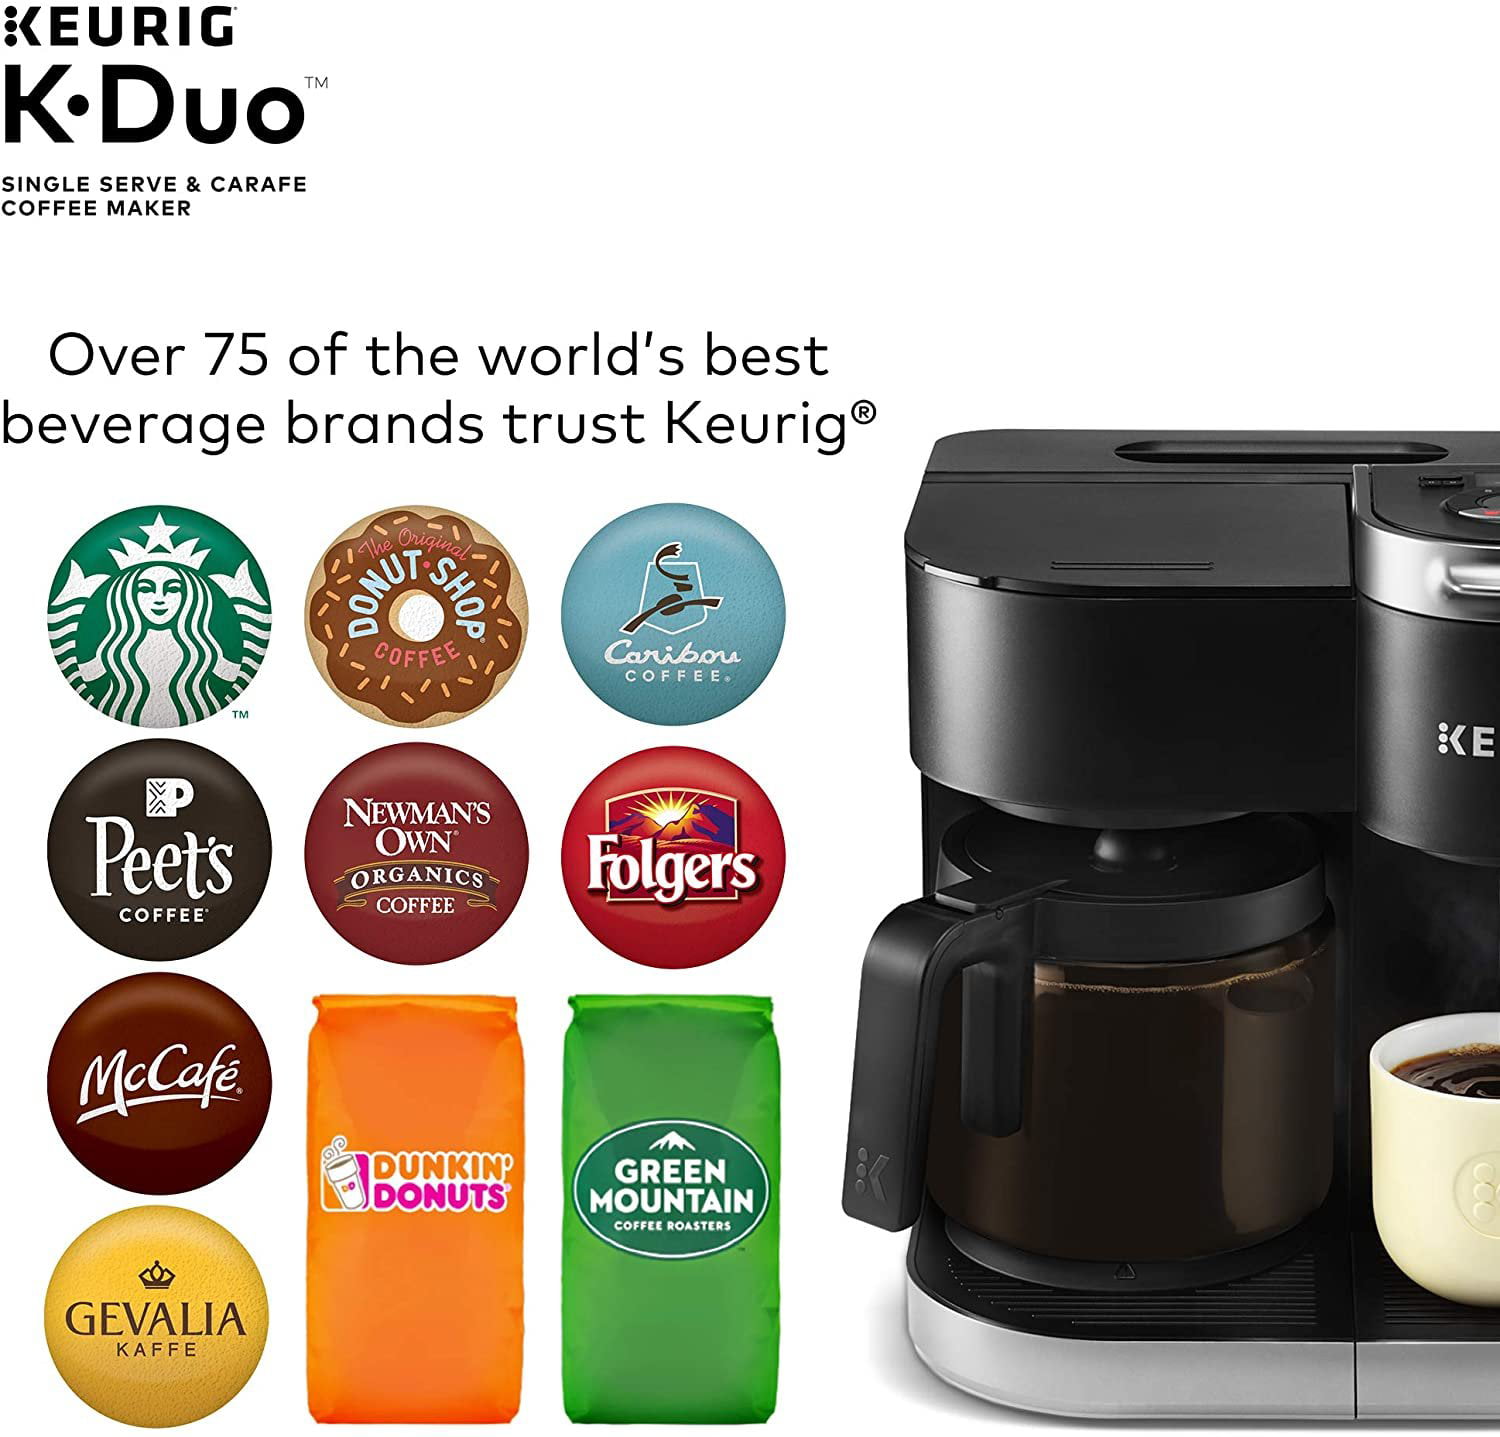 Keurig K Duo 12 Cup Coffee Brewing System Black - Office Depot